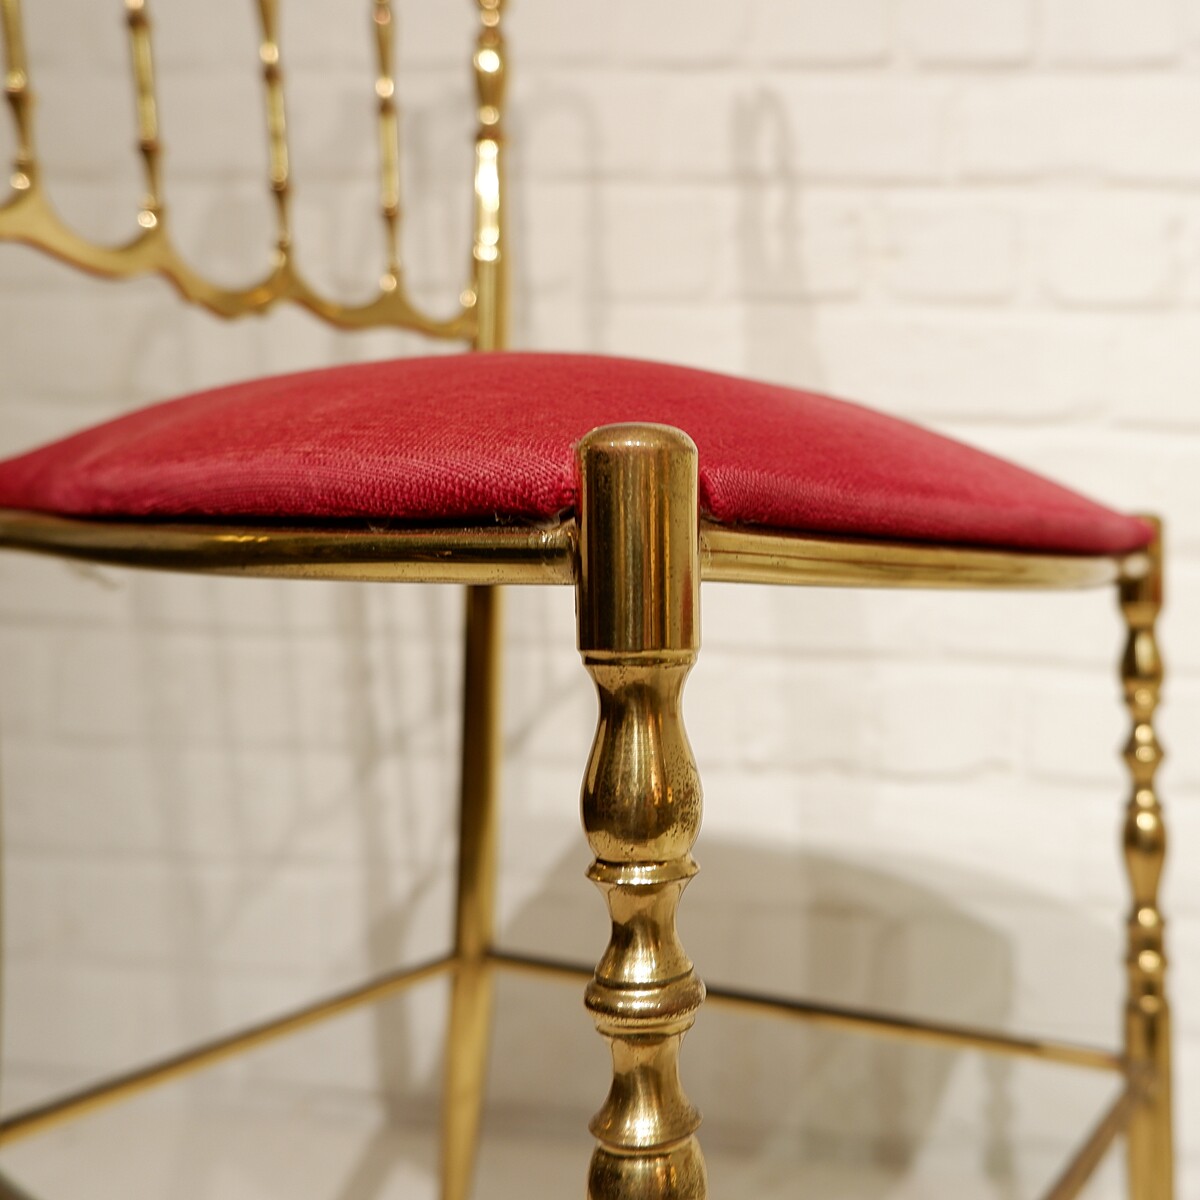 Polished Gilt Brass Chiavari Ballroom Chairs - 3 available (price per piece)